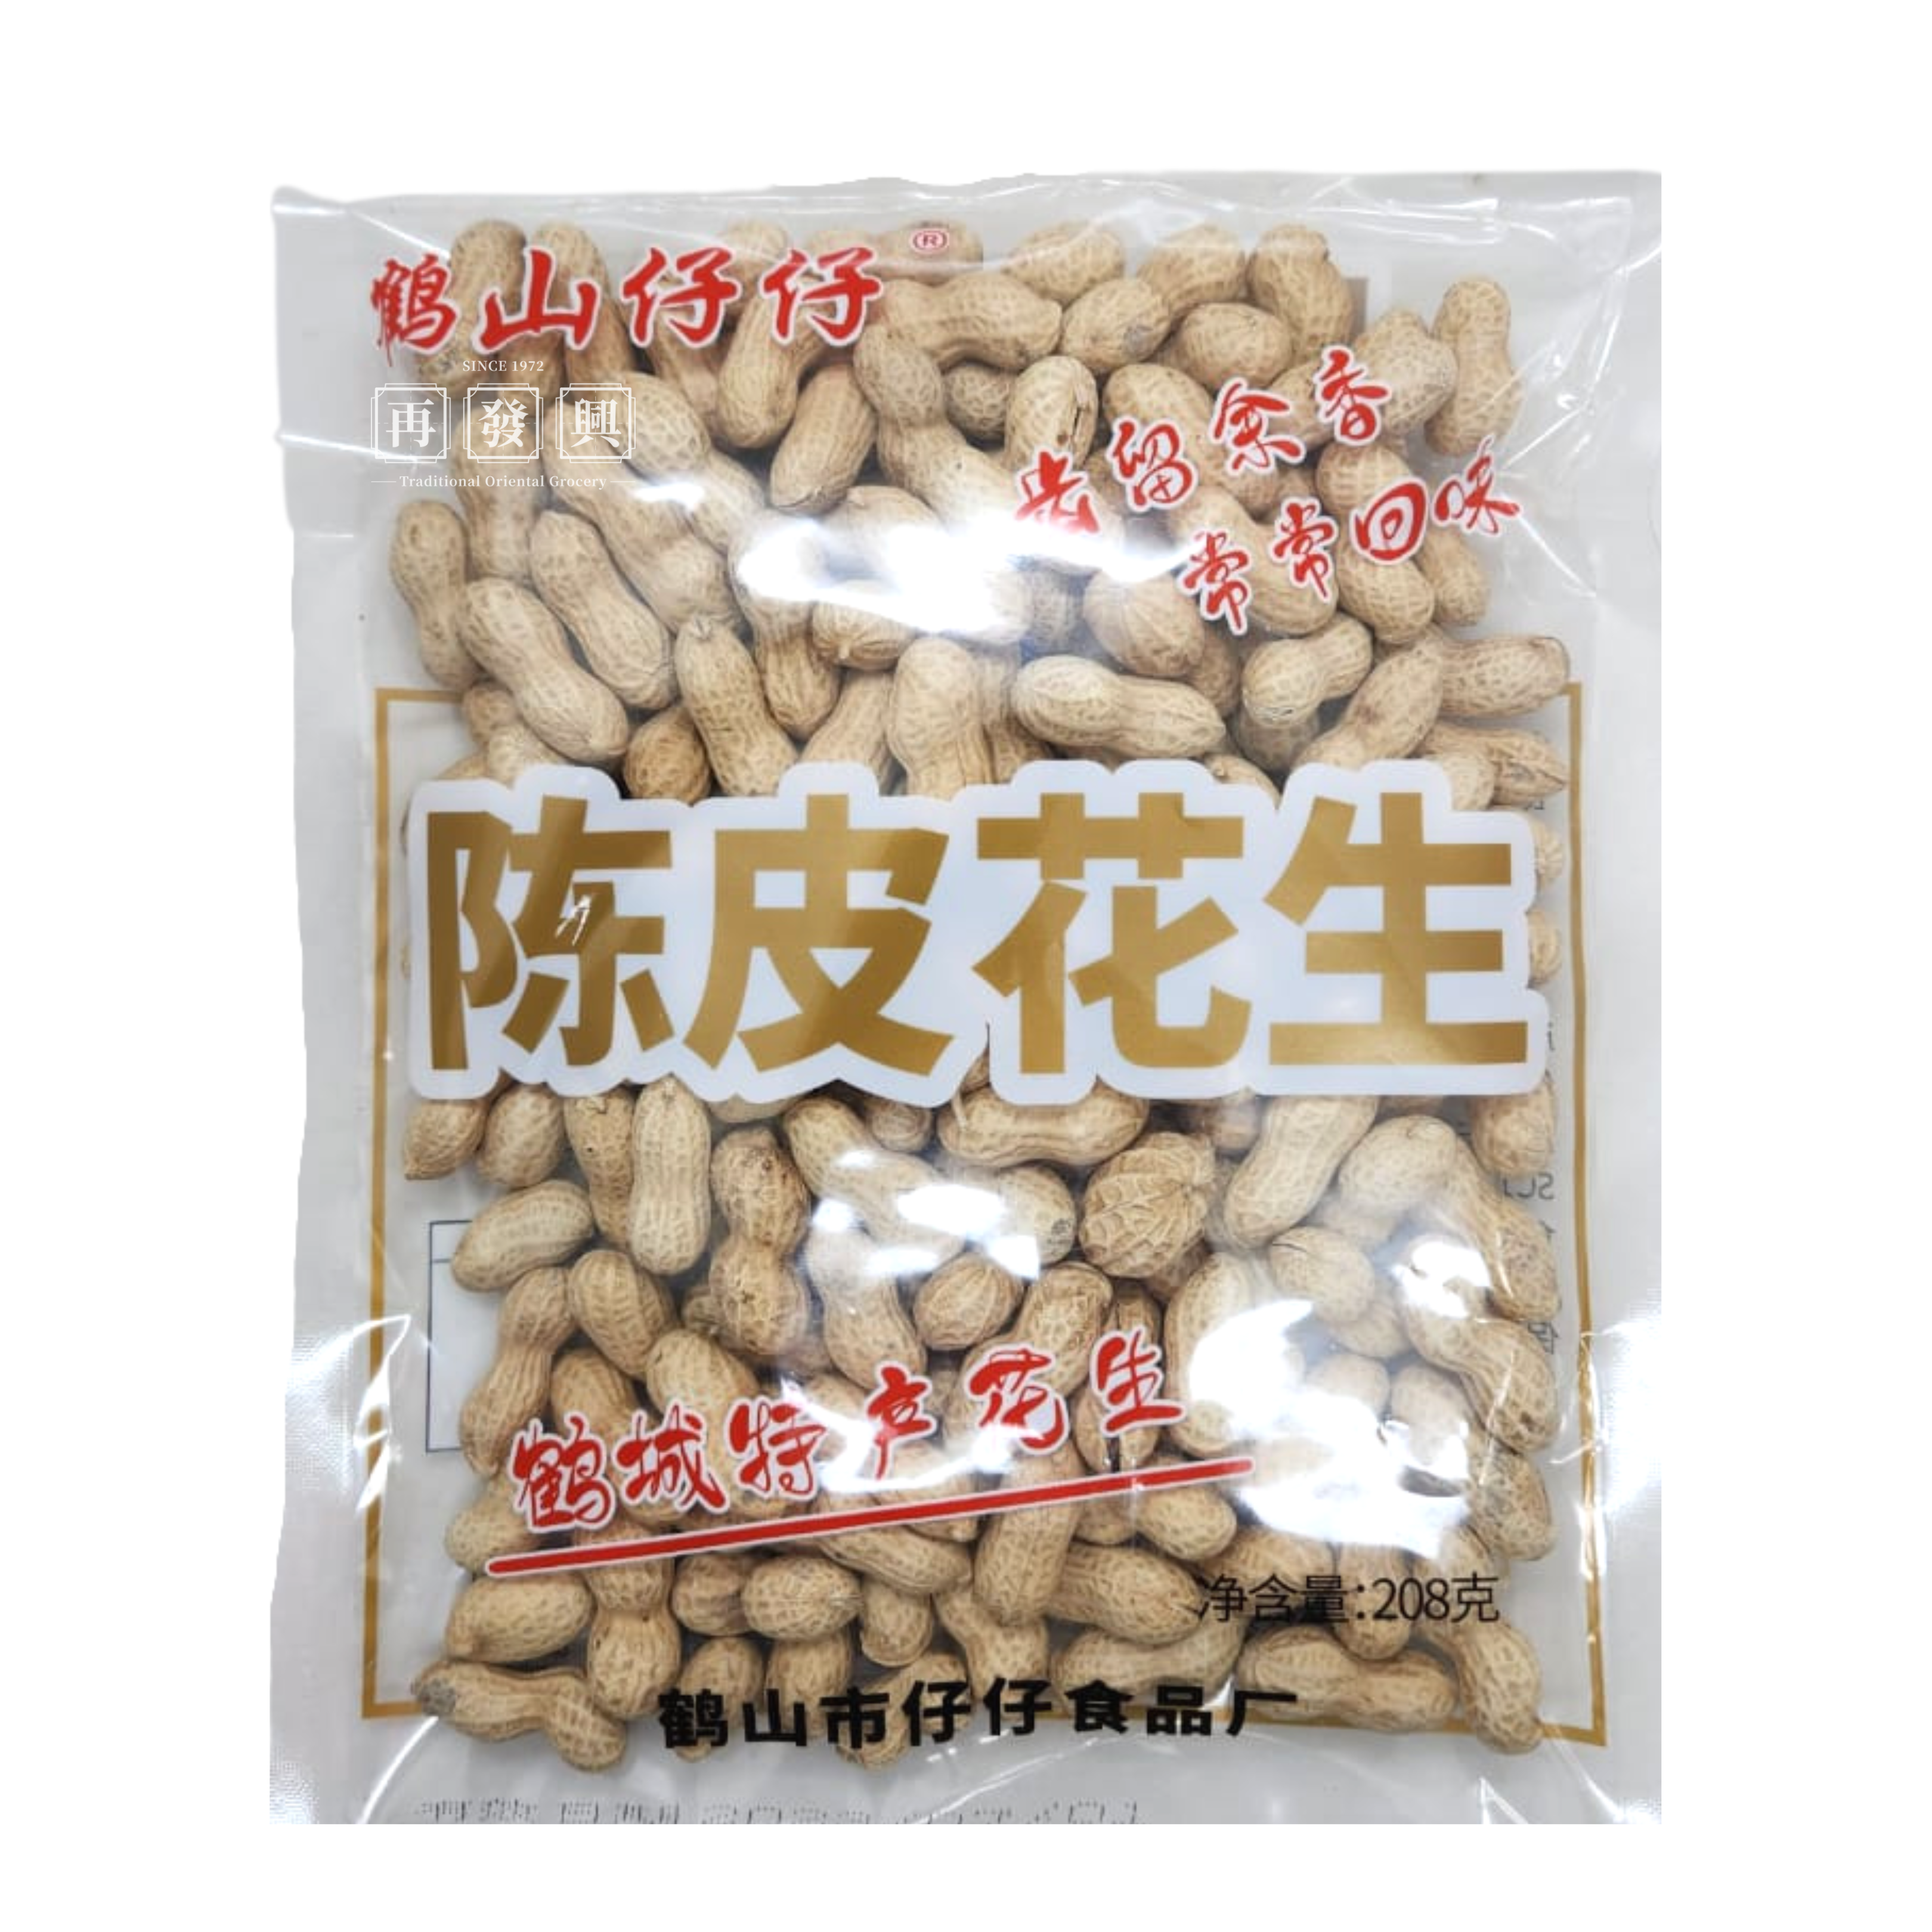 Tangerine Peel Peanuts in Shell 陈皮花生 208g